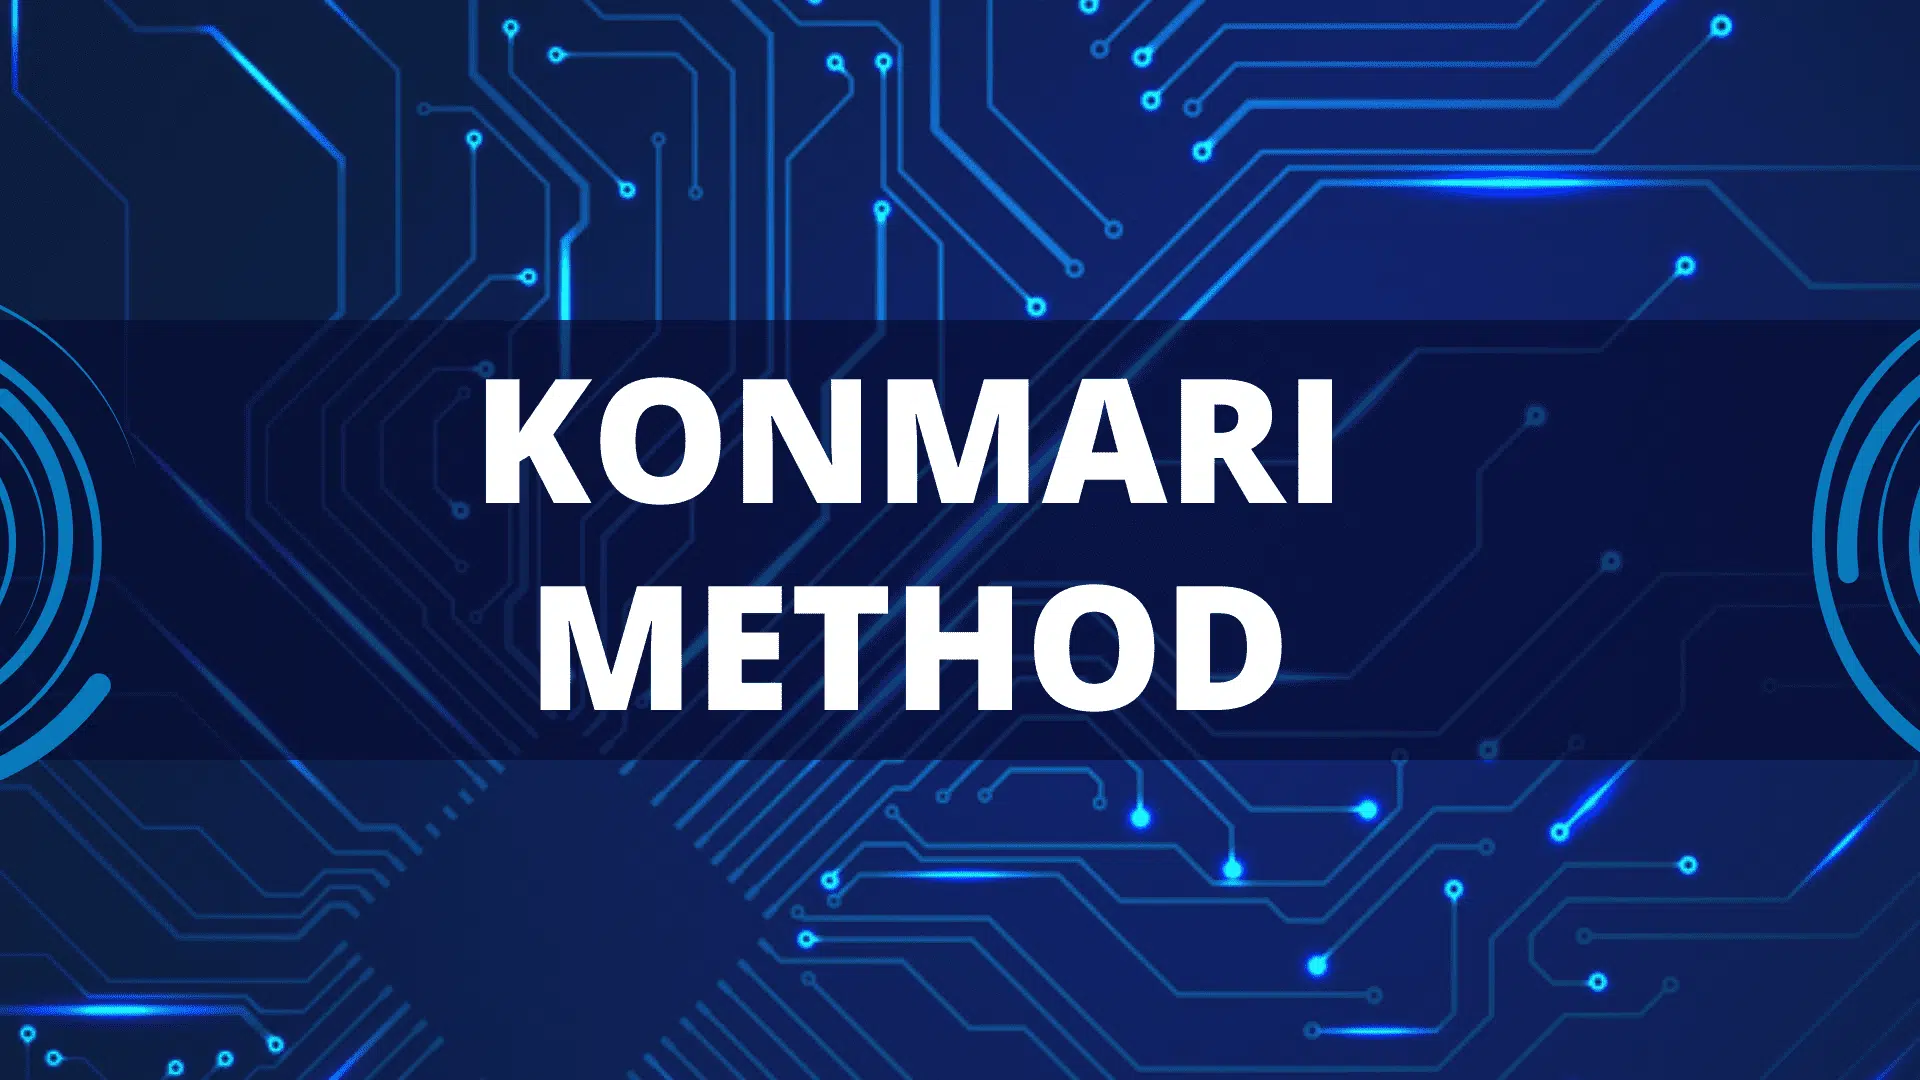 KonMari Method